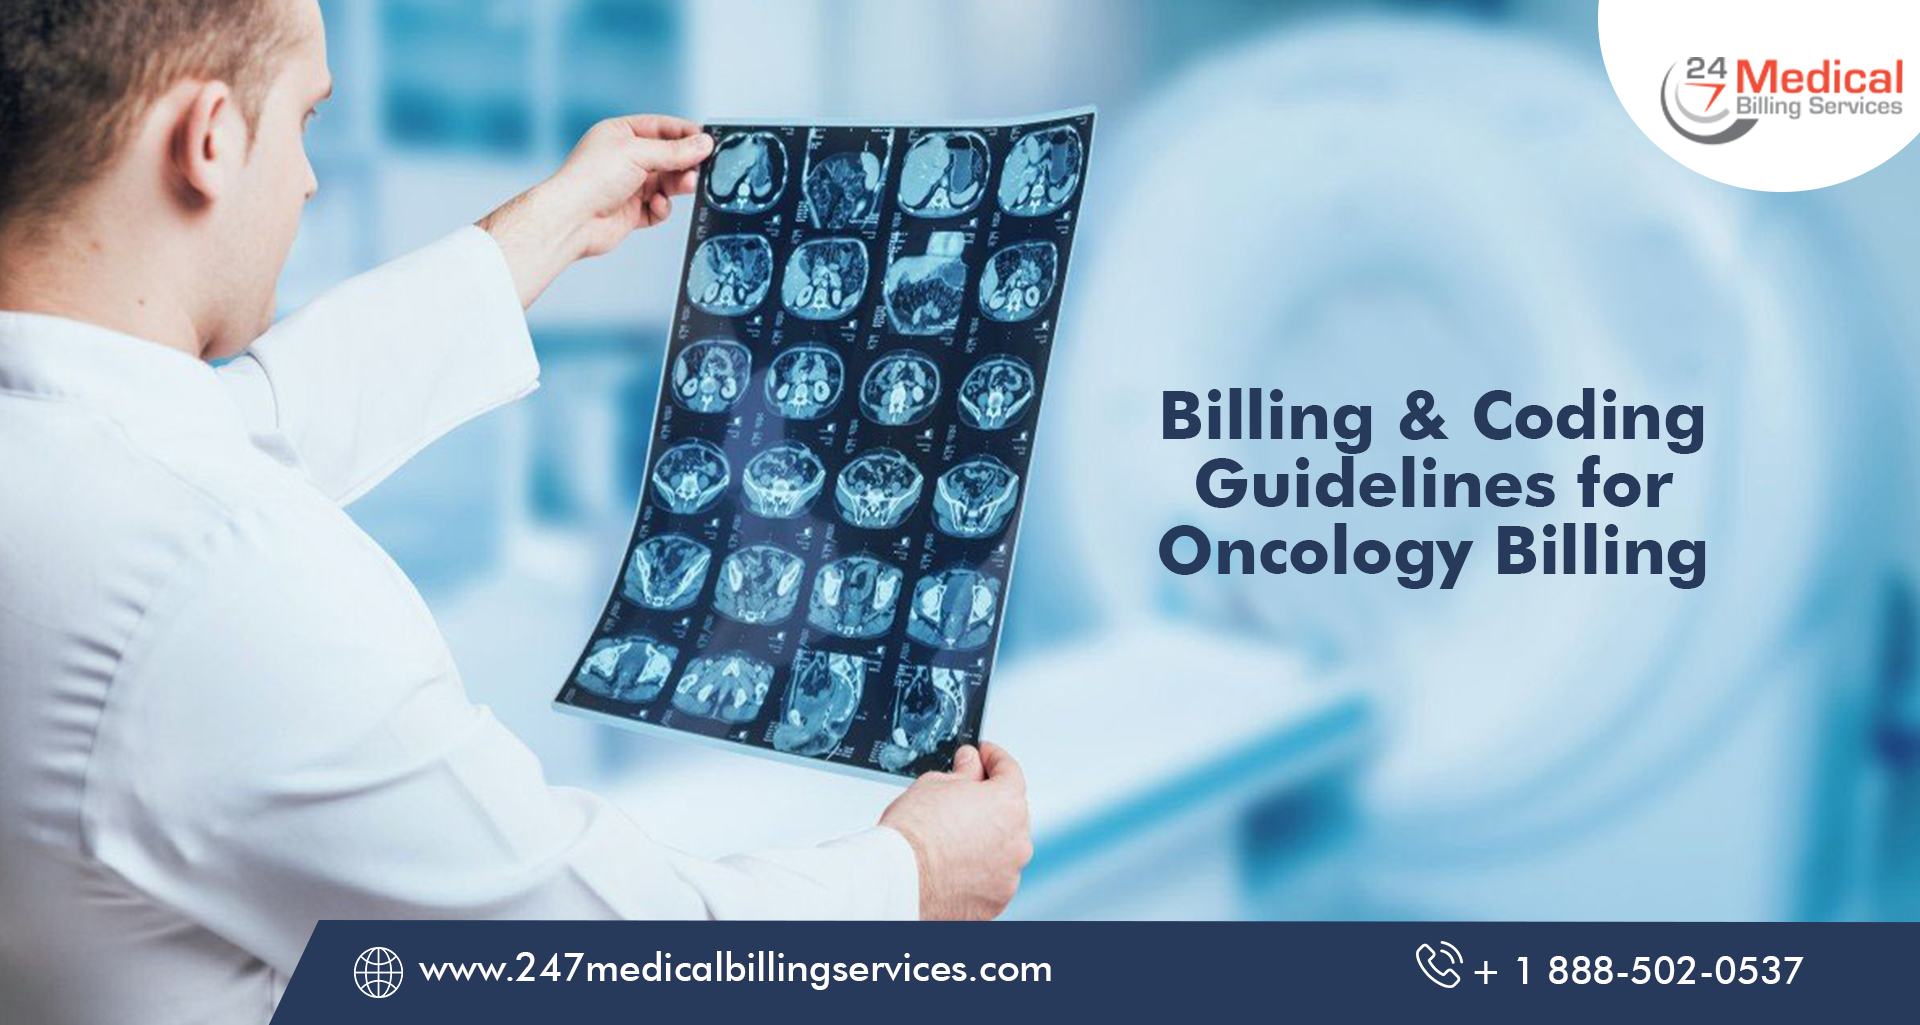  Billing & Coding Guidelines for Oncology Billing